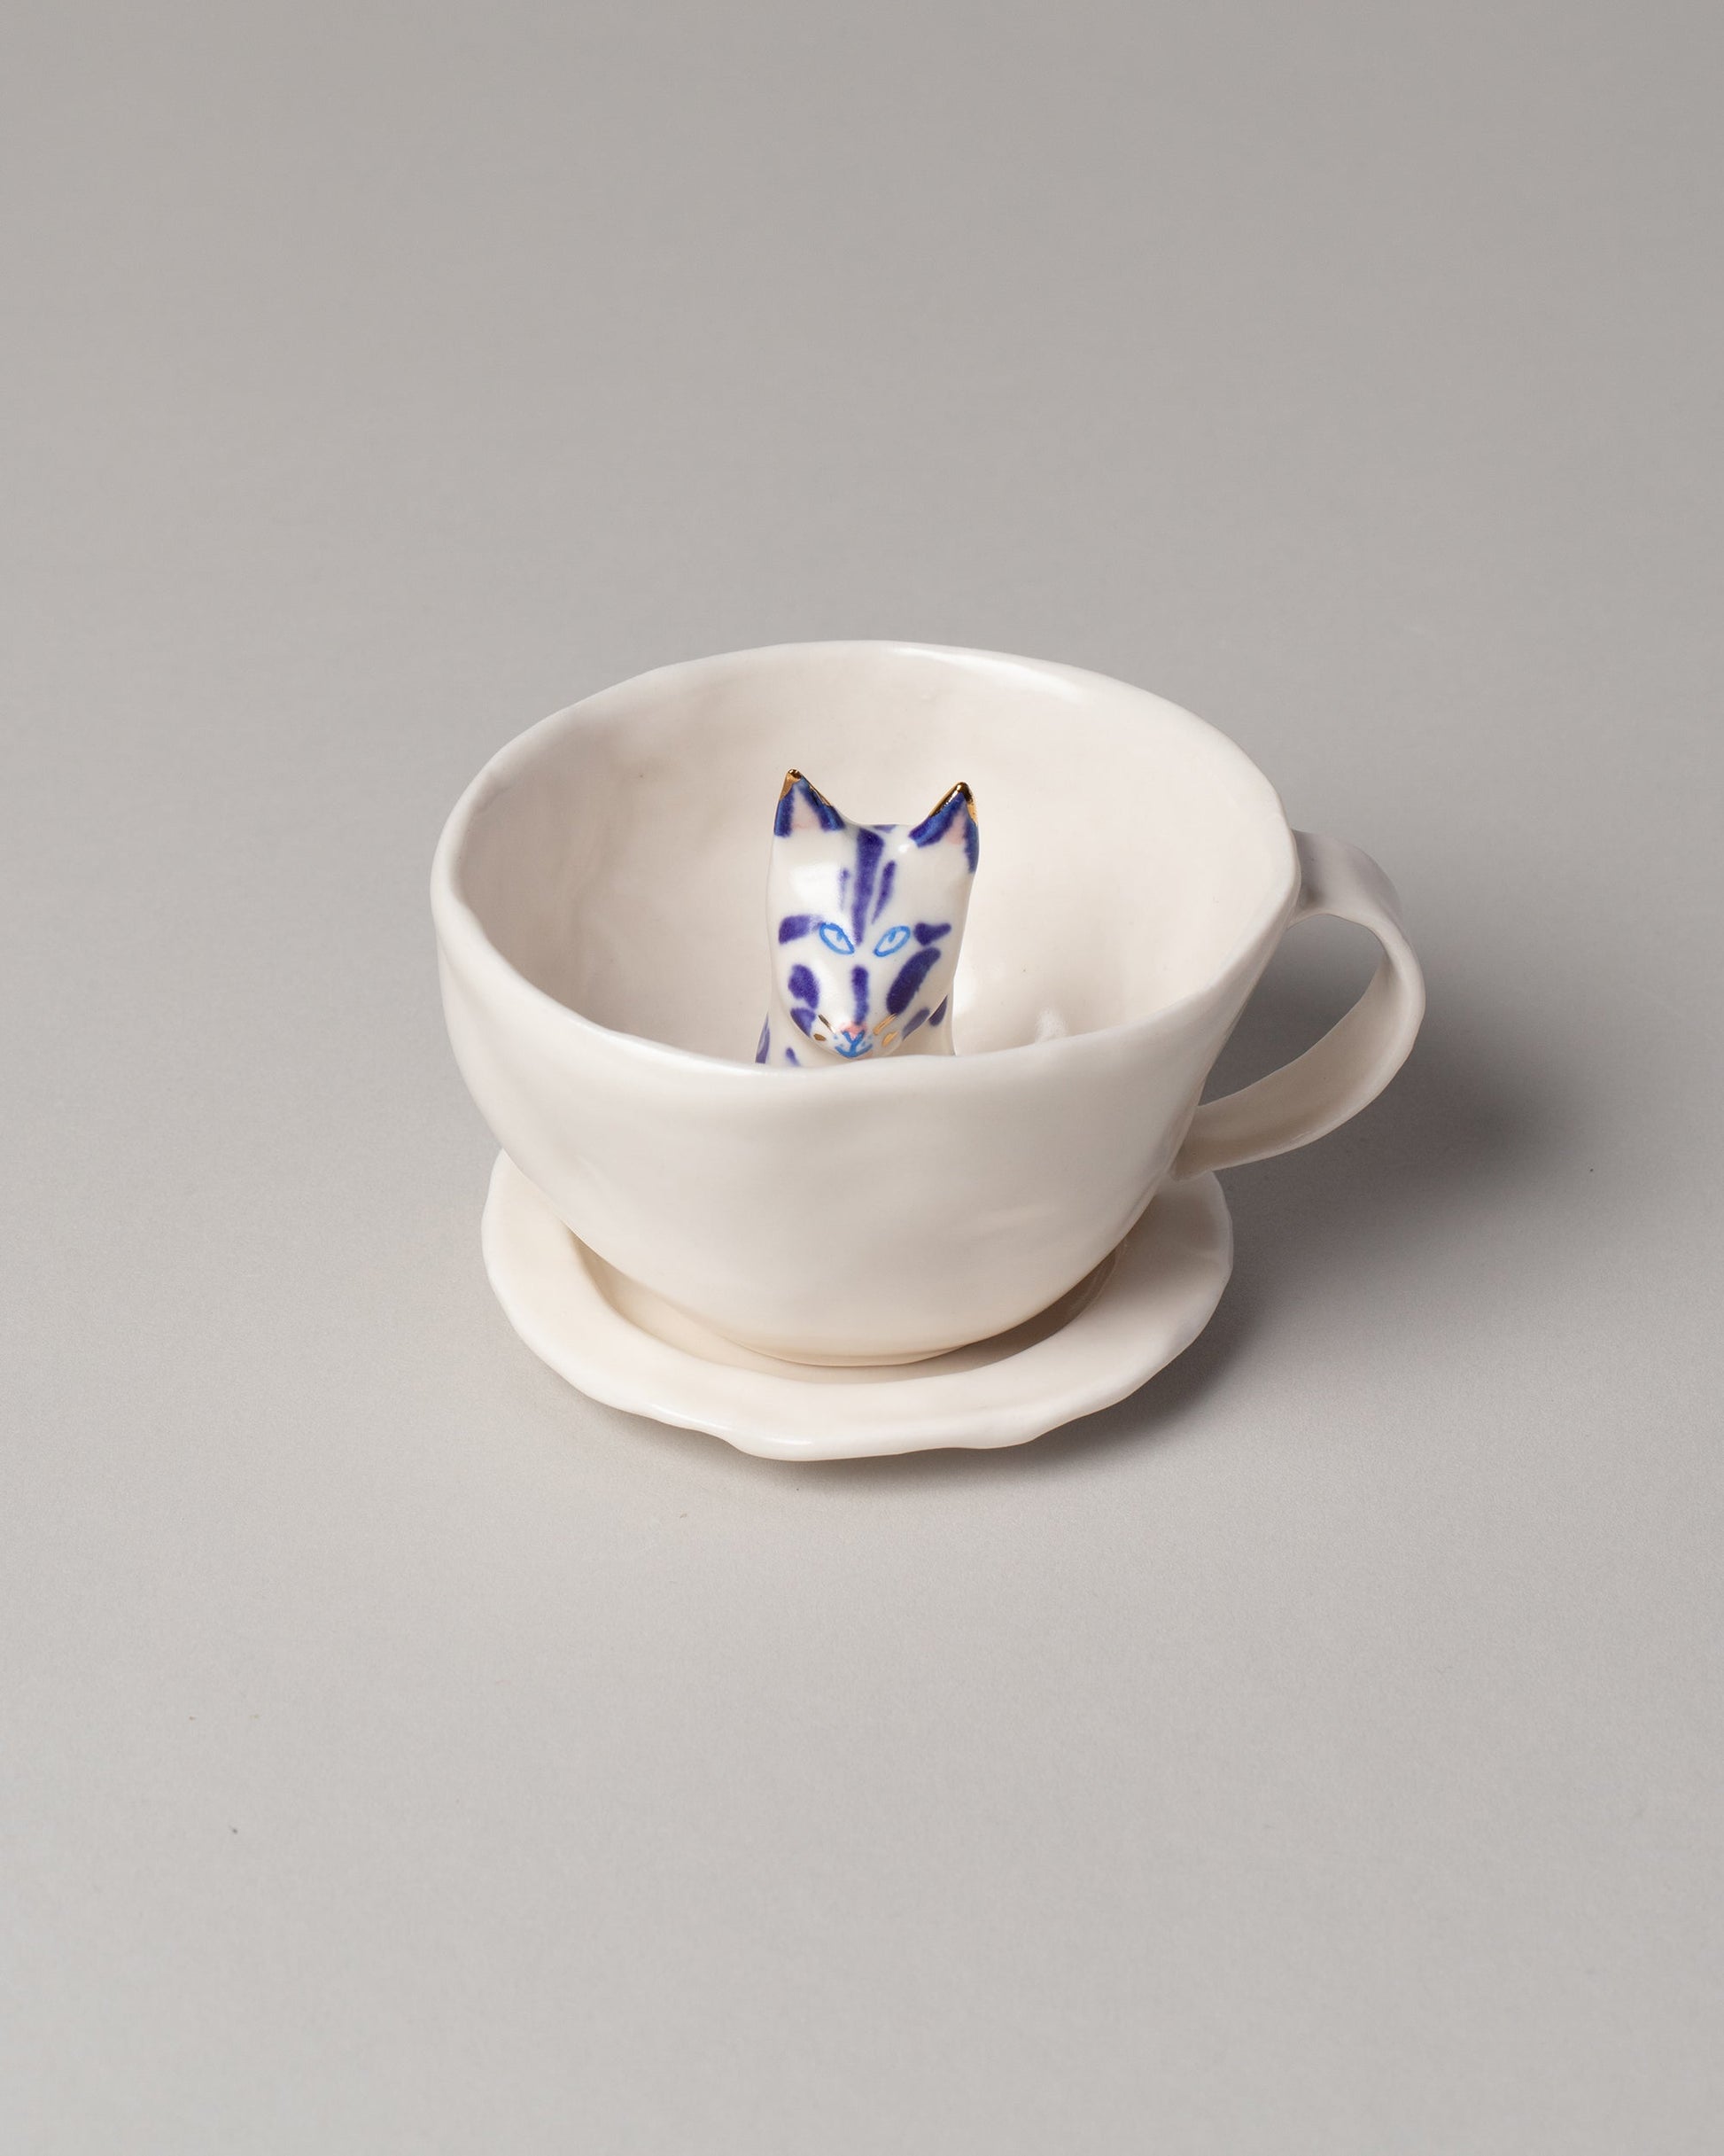 Eleonor Boström Blue Spots Cat Tea Cup with Saucer on light color background.